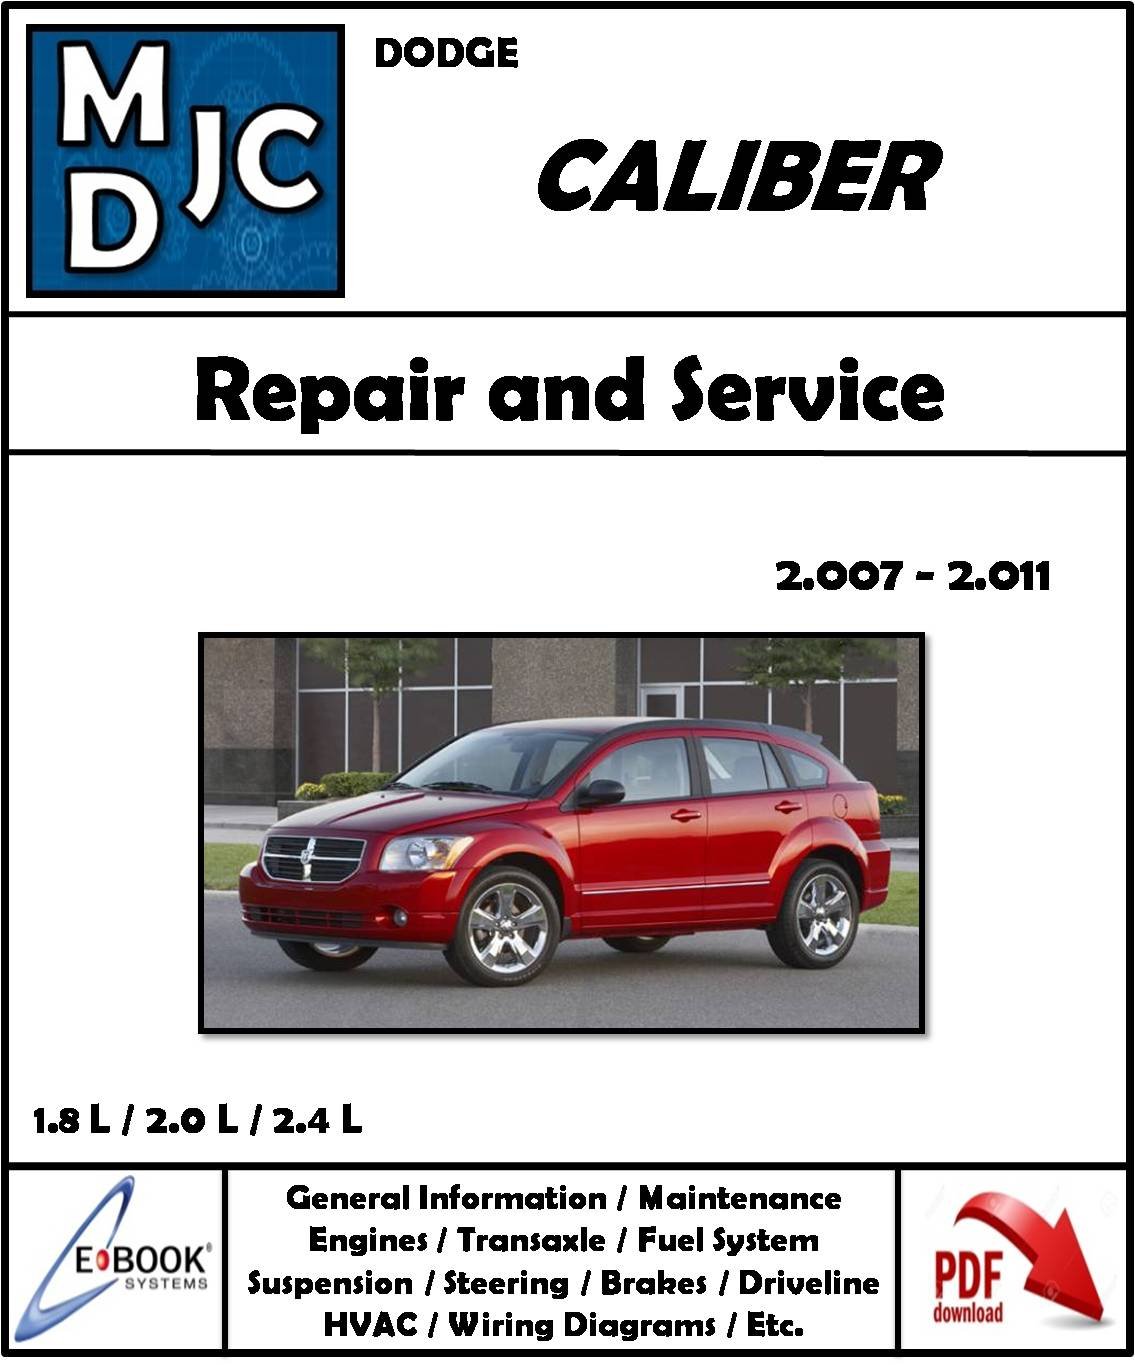 Manual de Taller Dodge Caliber 2007-2011